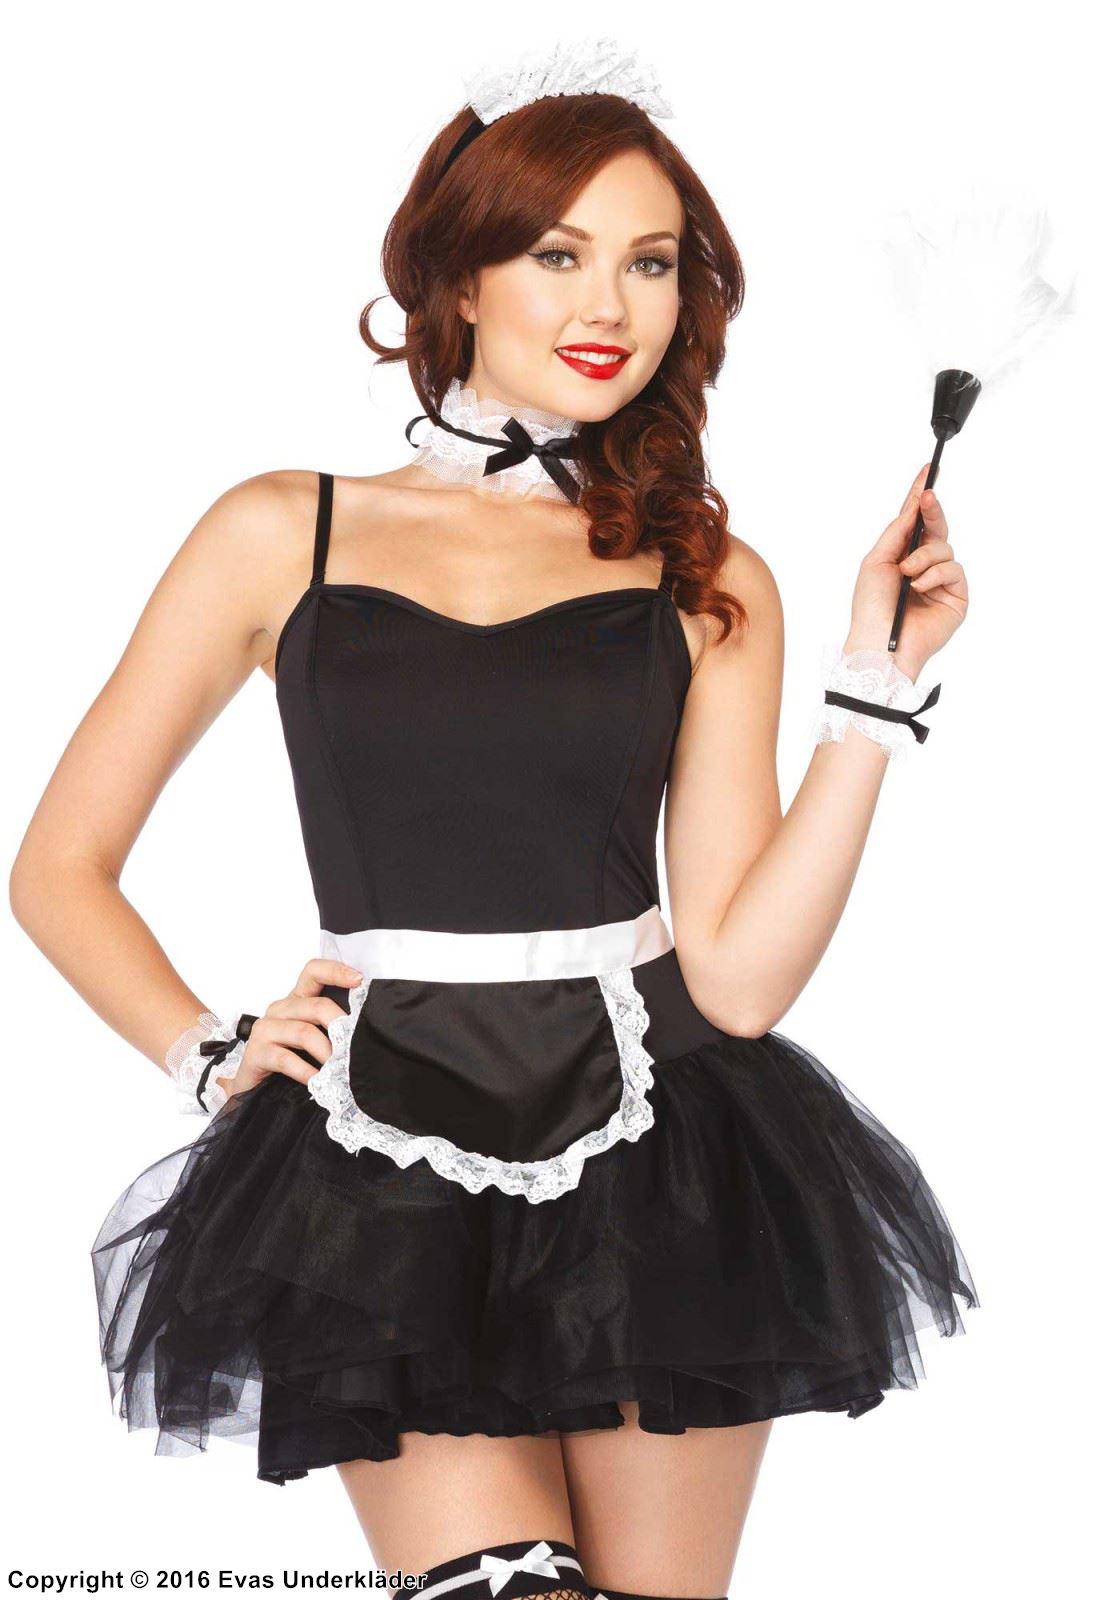 French maid, costume dress, ruffle trim, apron